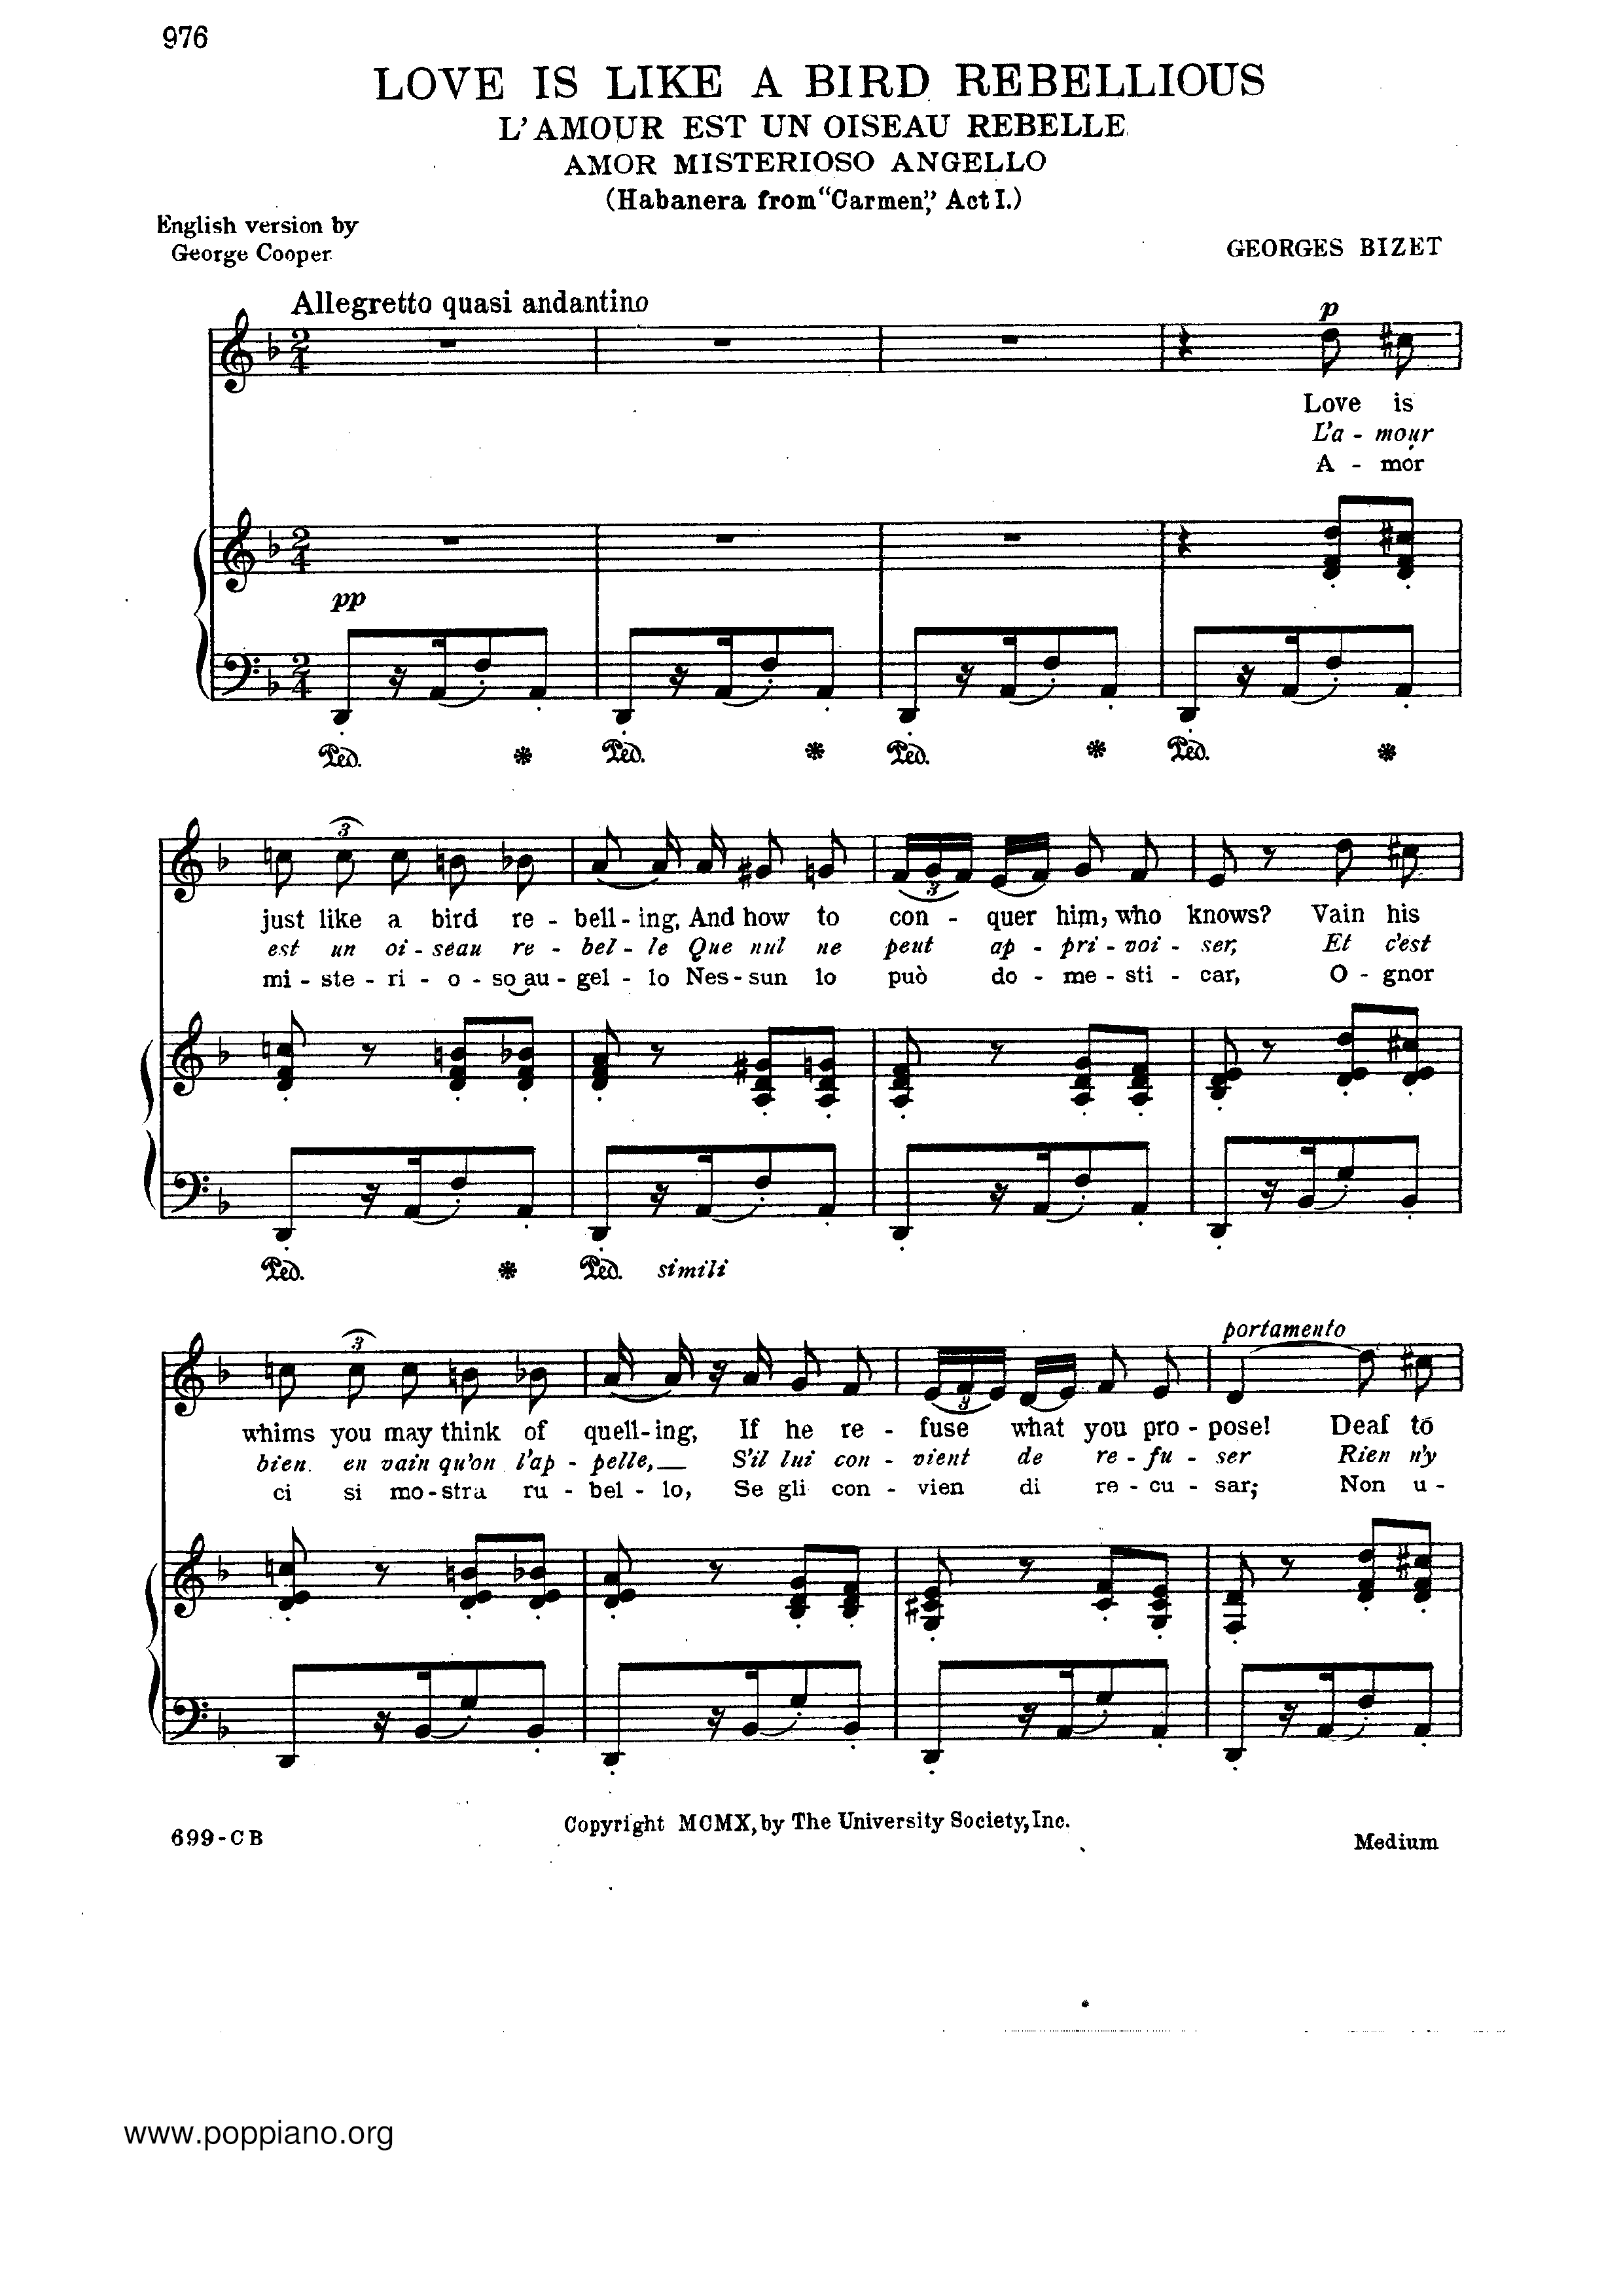 Carmen - Habaneraピアノ譜